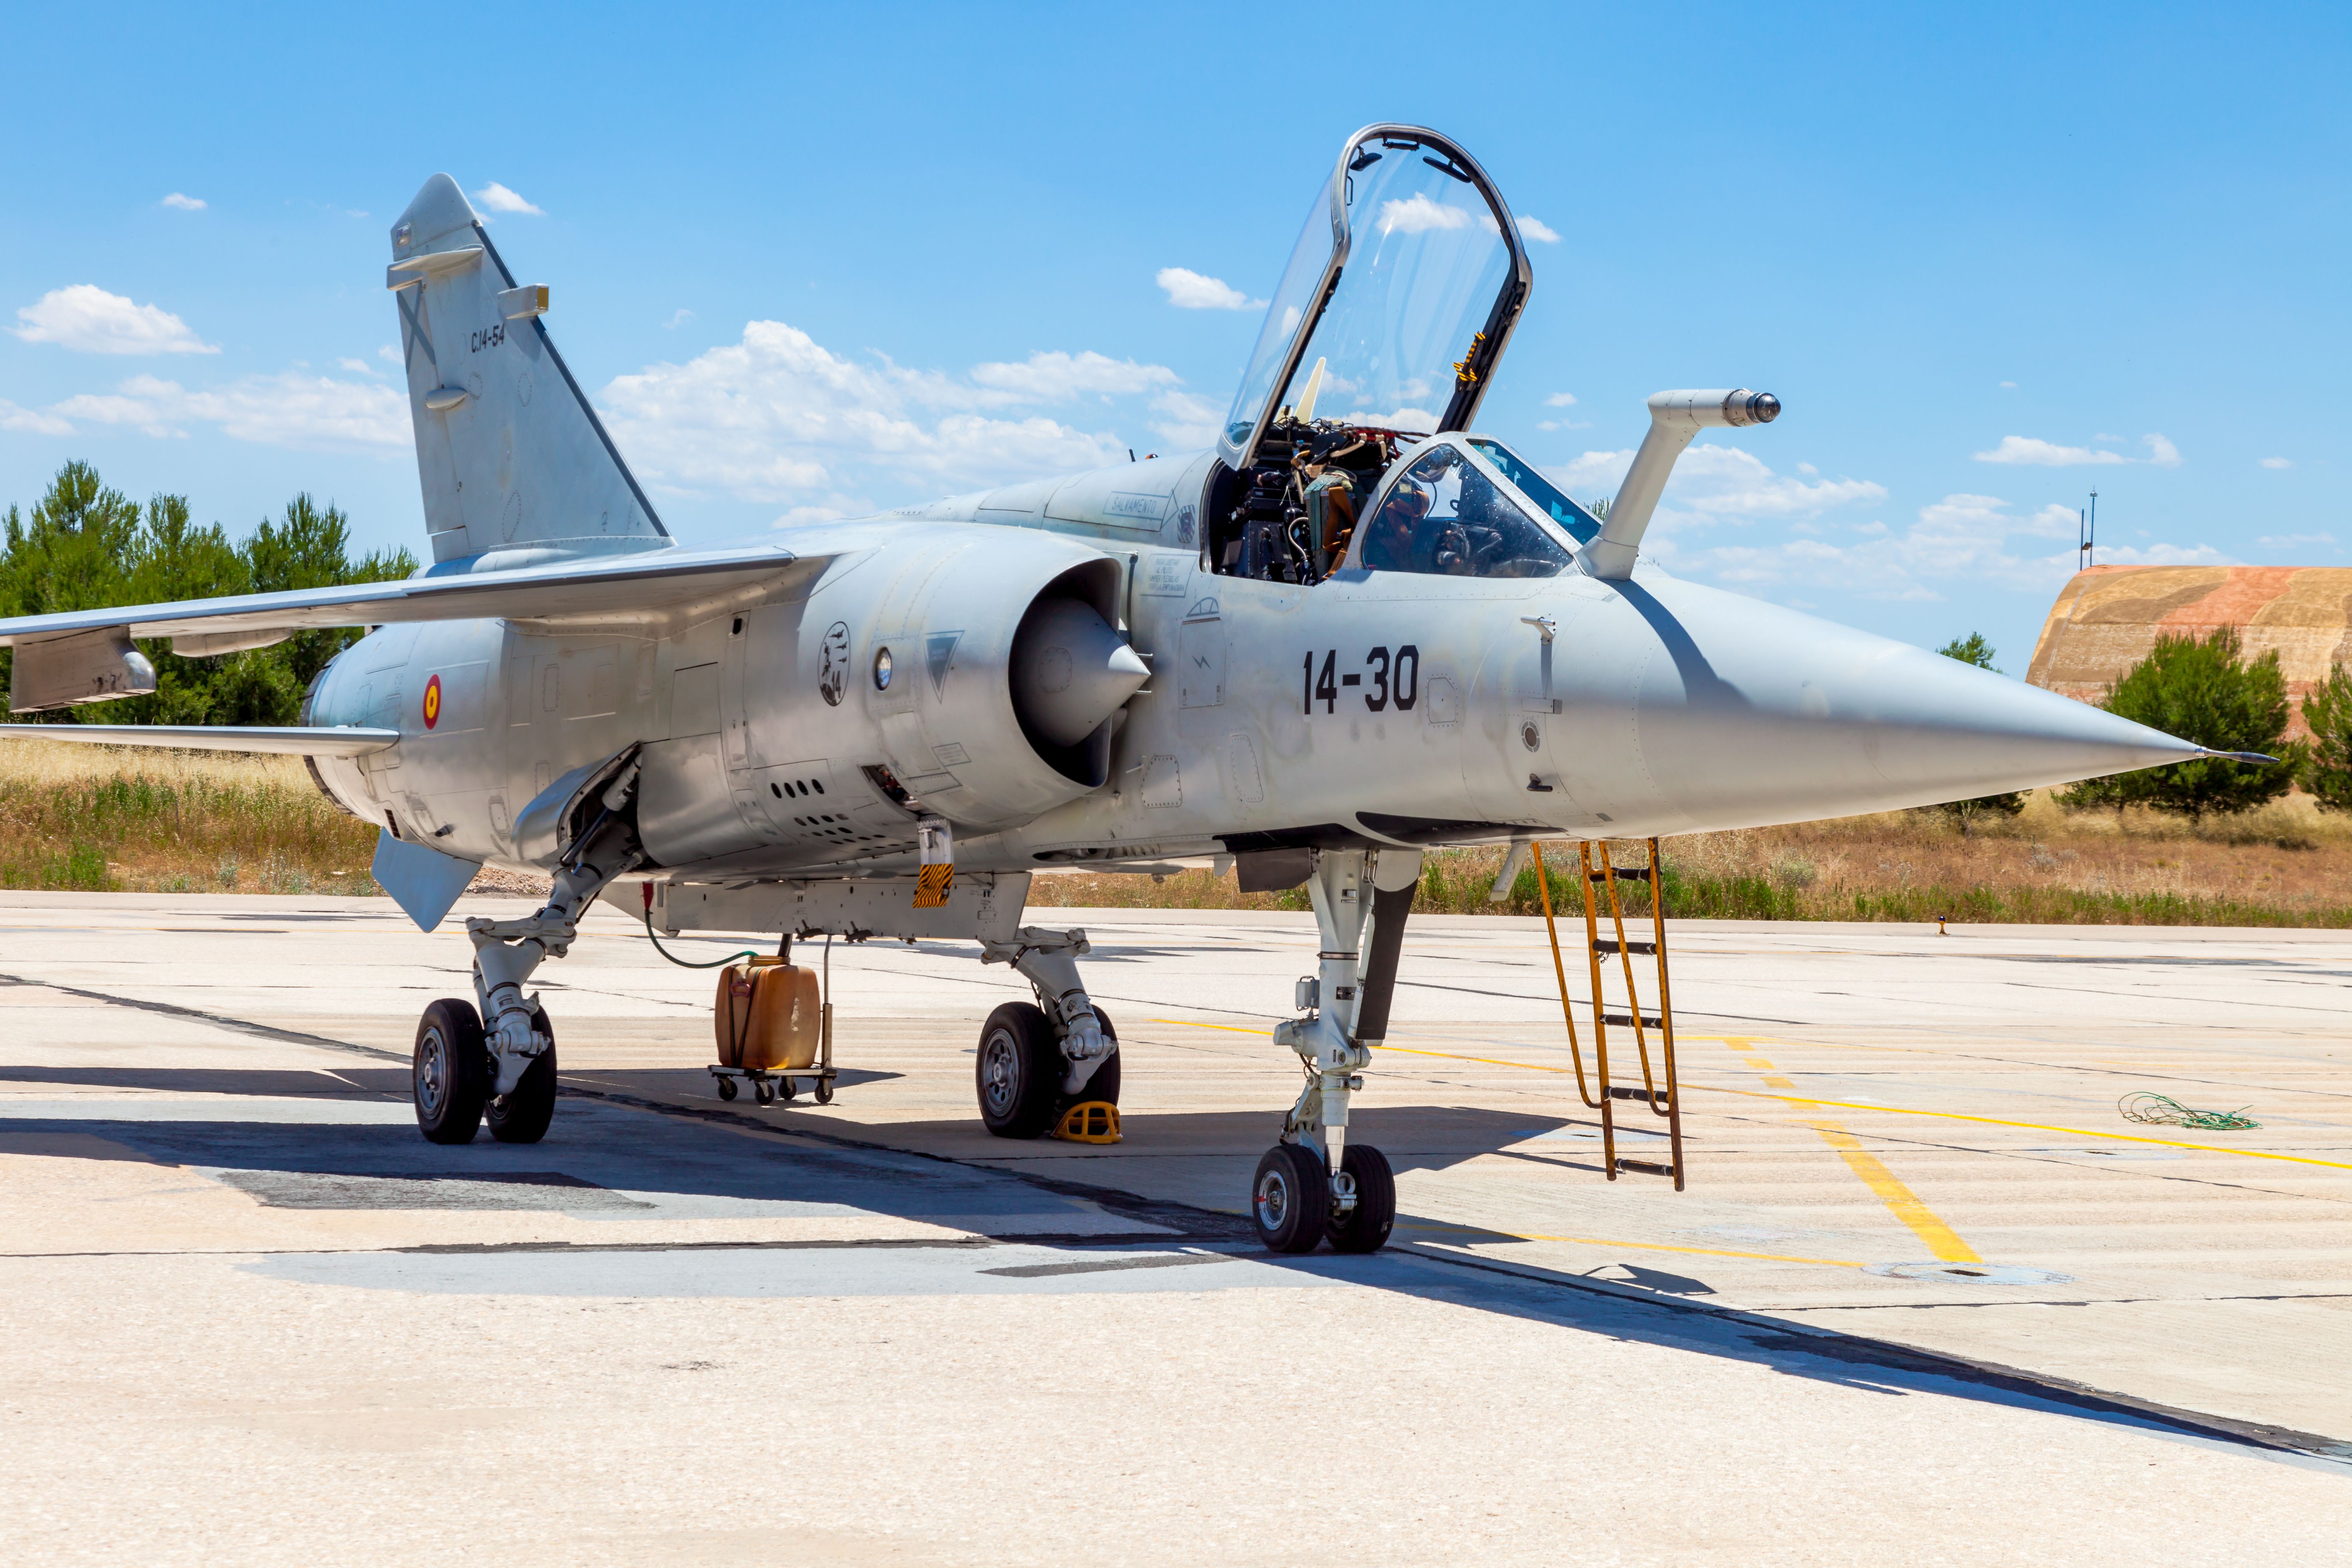 A Dassault Mirage F1 parked at an airfield.